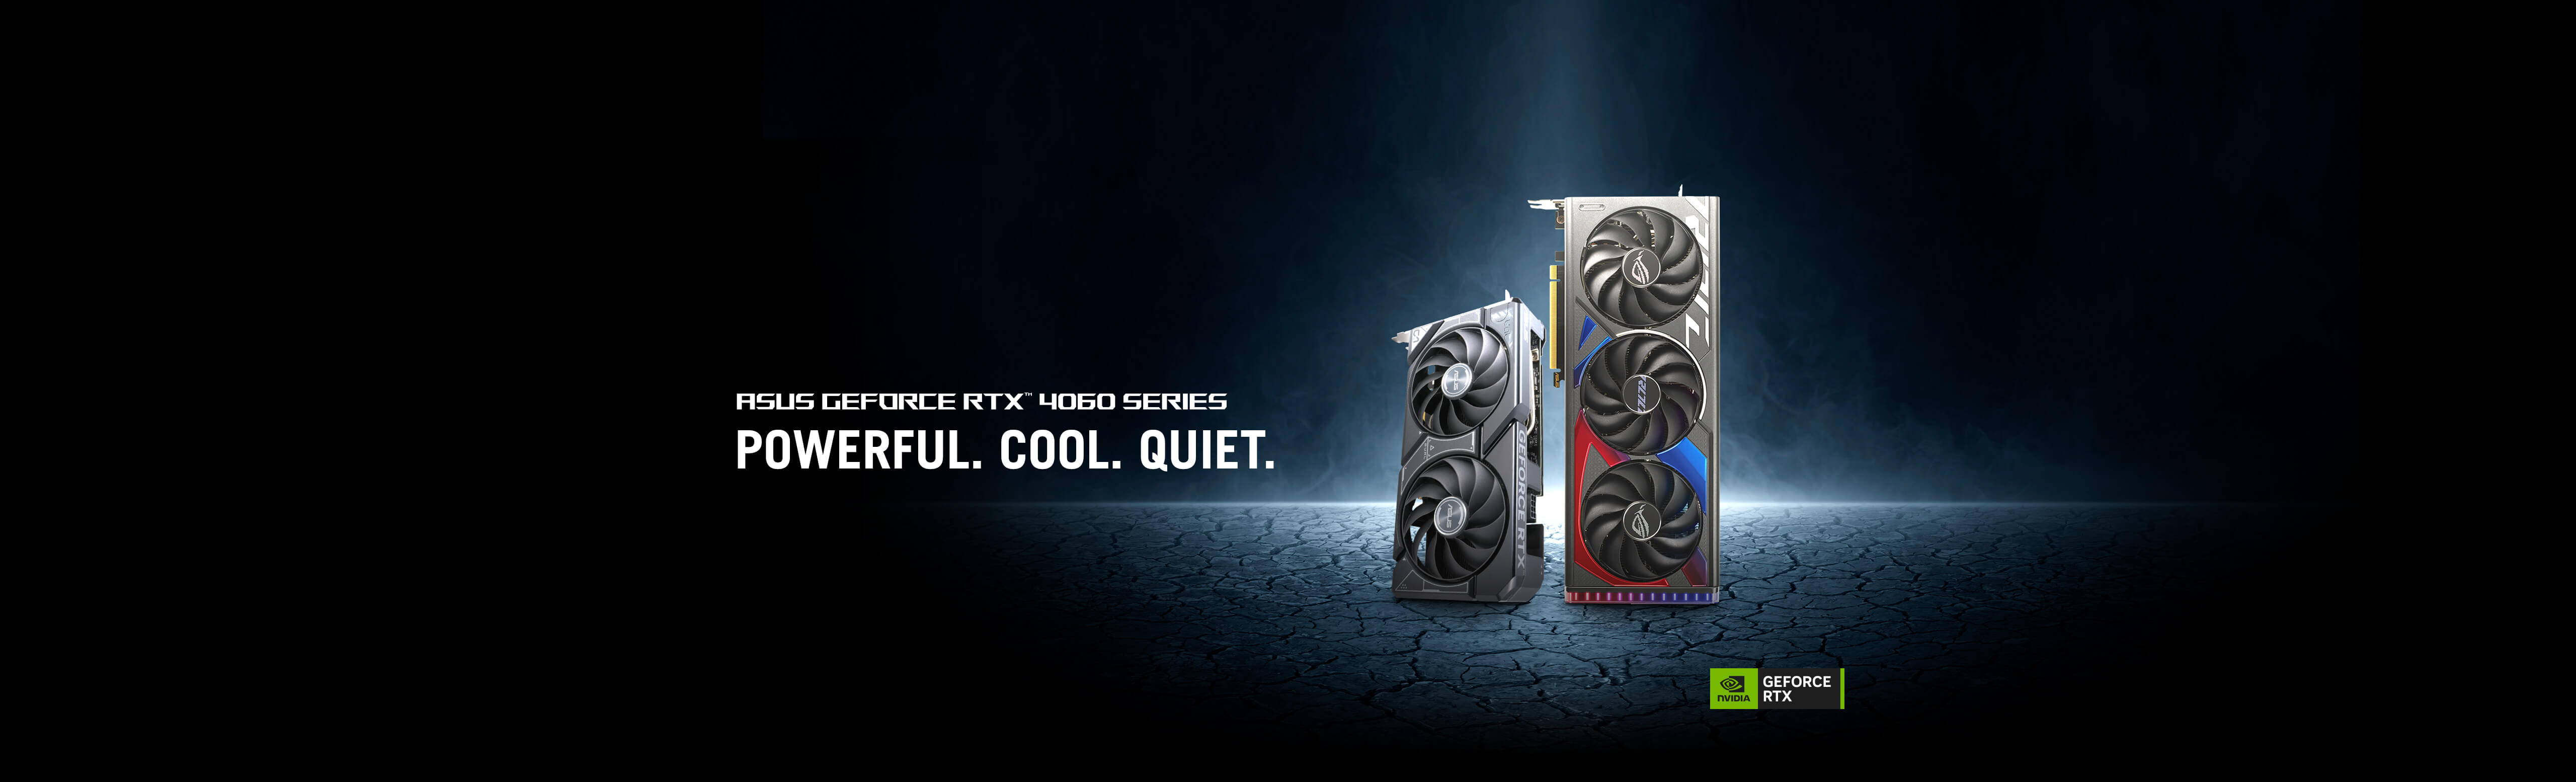 ASUS Dual GeForce RTX™ 4060 和 ROG Strix GeForce RTX™ 4060 顯示卡矗立於乾燥的混凝土地面，背景顯示霓虹燈和霧氣效果